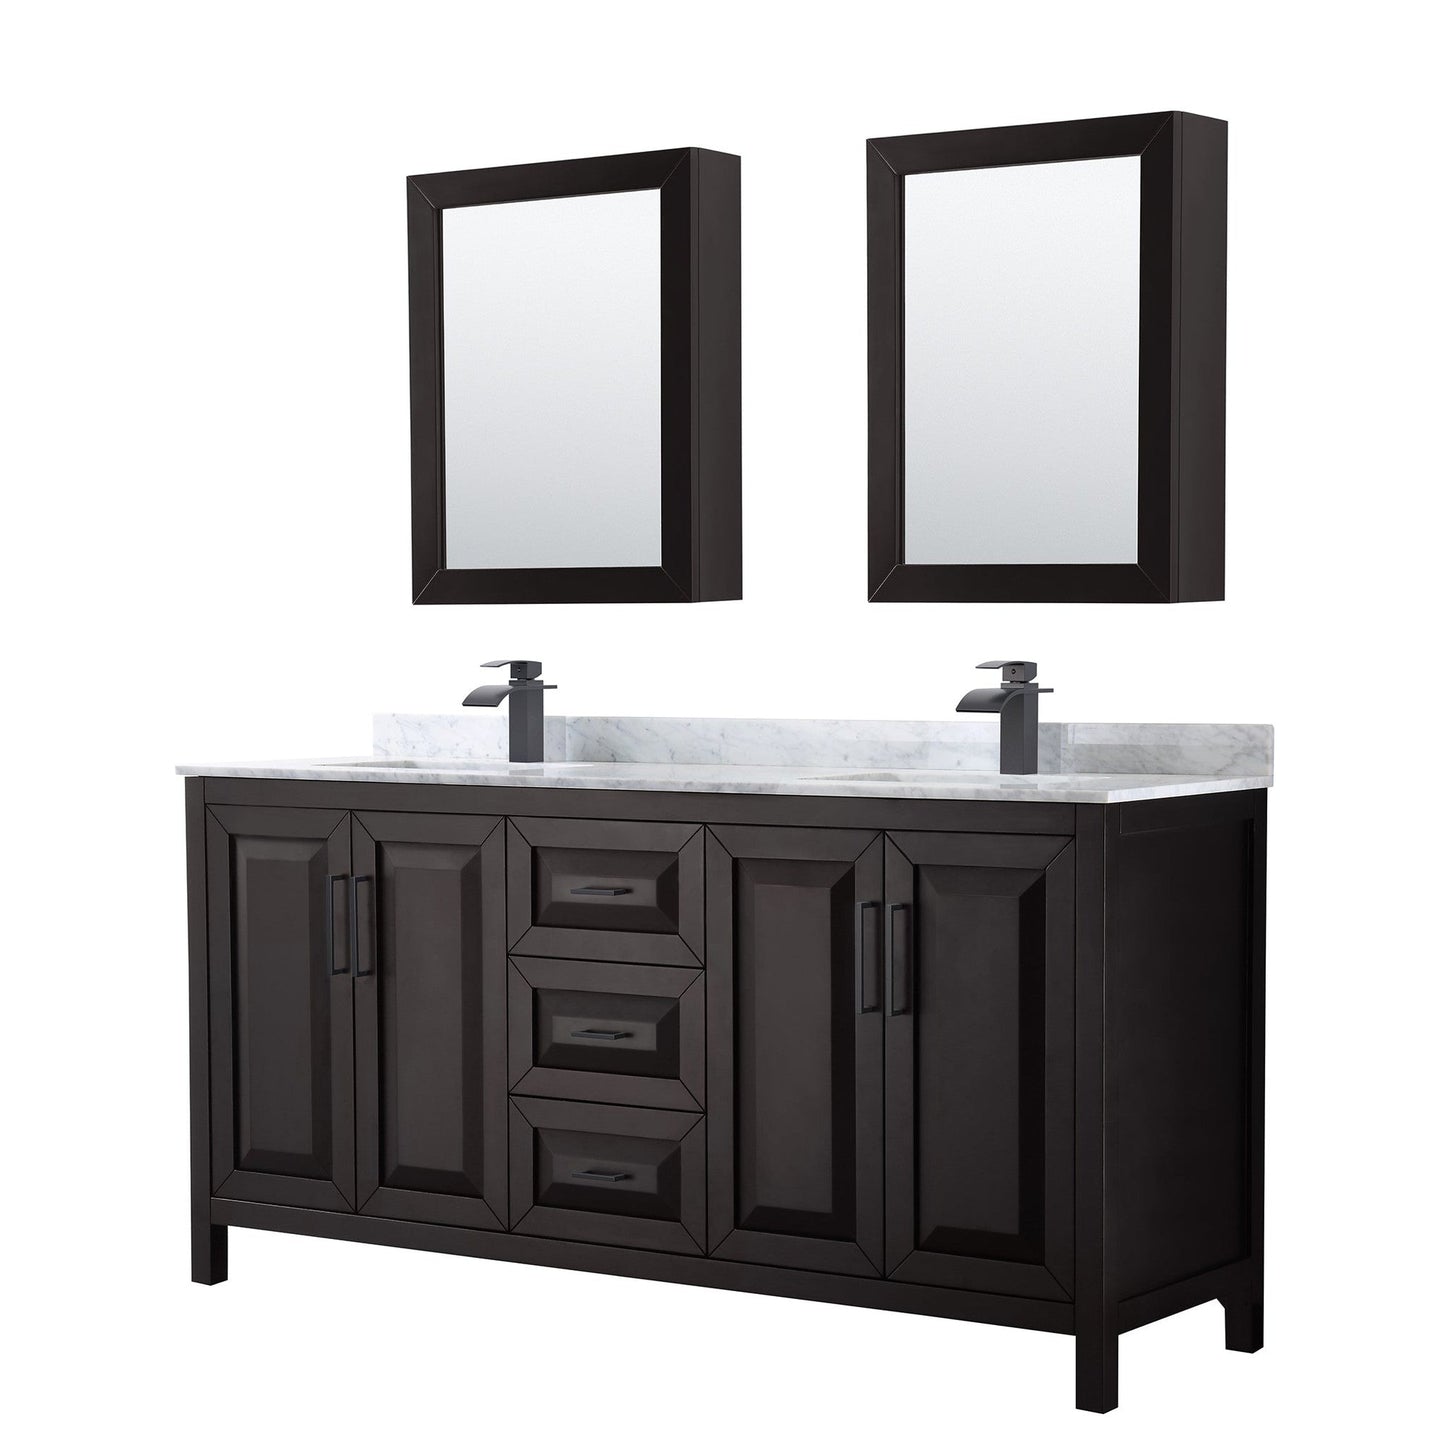 Daria 72" Double Bathroom Vanity in Dark Espresso, White Carrara Marble Countertop, Undermount Square Sinks, Matte Black Trim, Medicine Cabinets